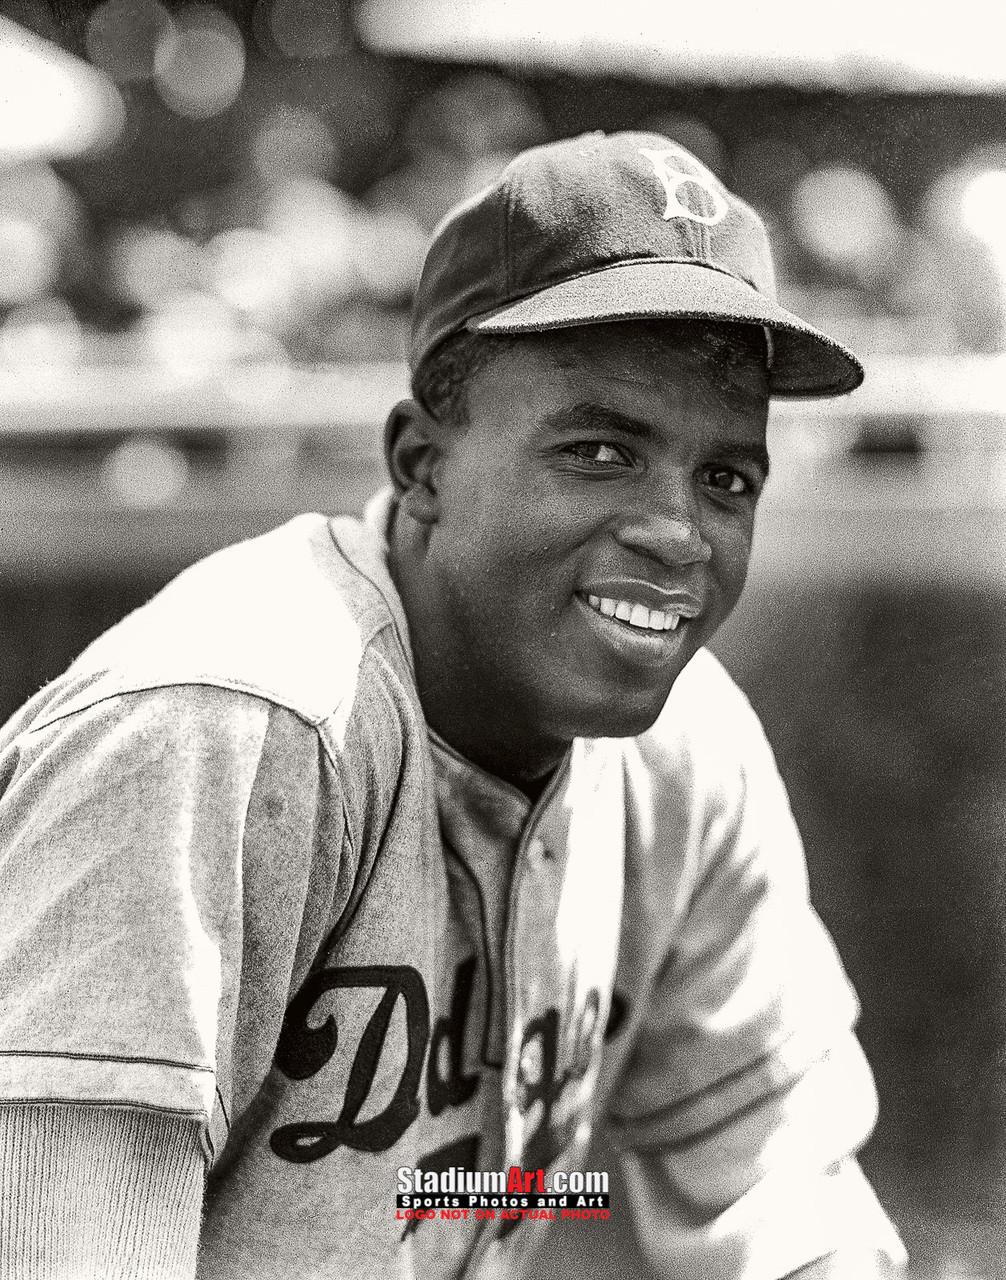 Jackie Robinson Los Angeles Dodgers Black Baseball Jersey